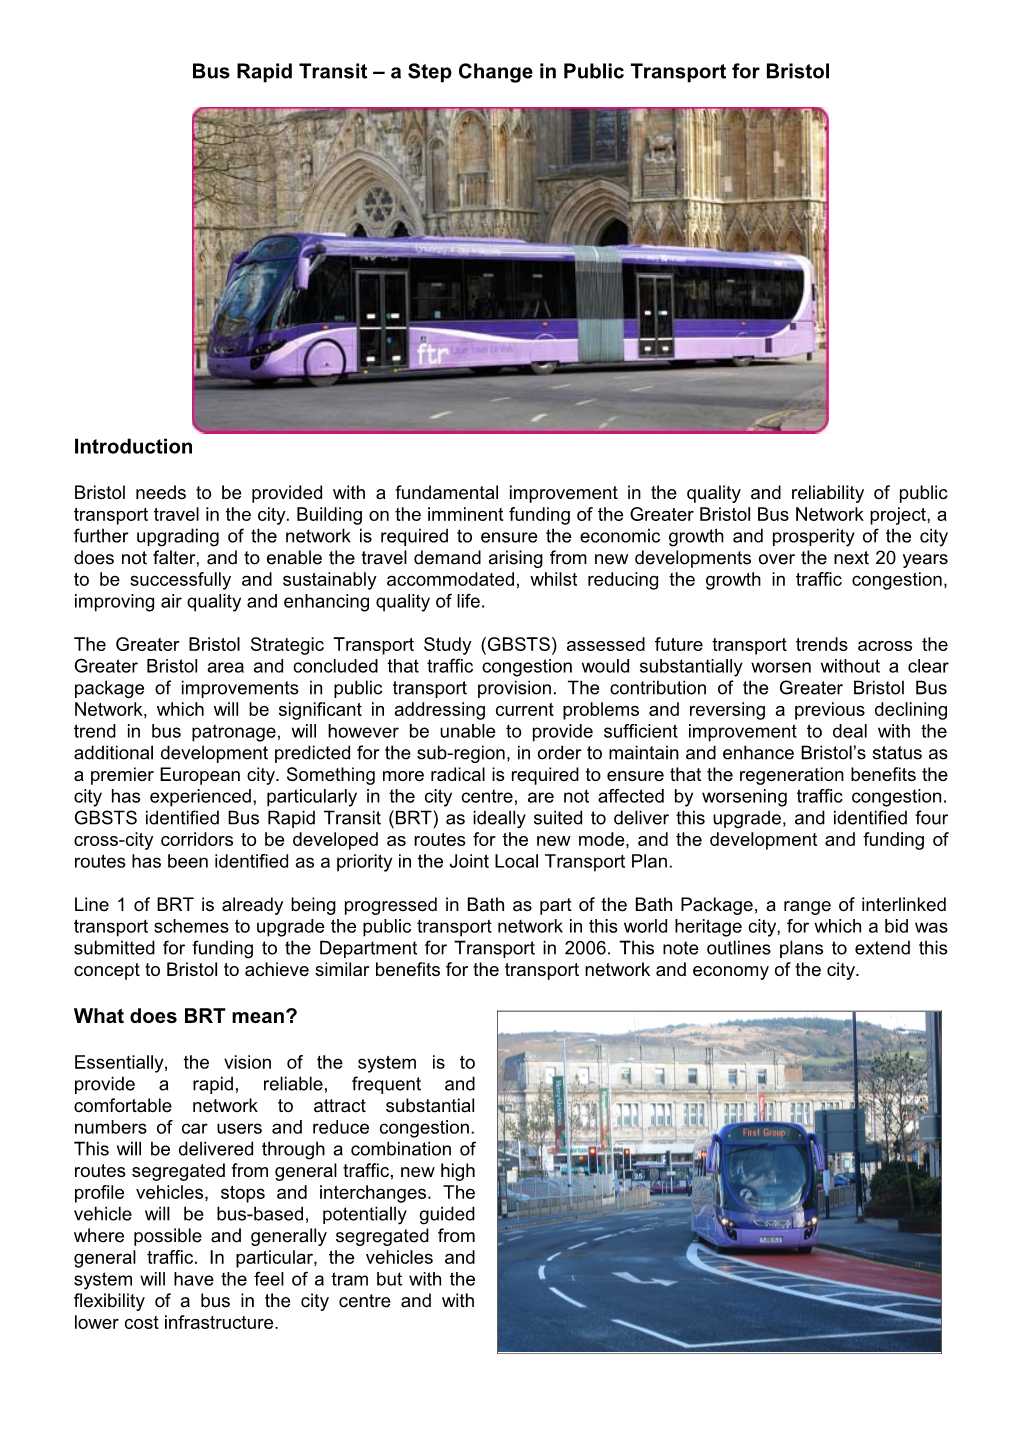 Bus Rapid Transit – a Step Change in Public Transport in Bristol